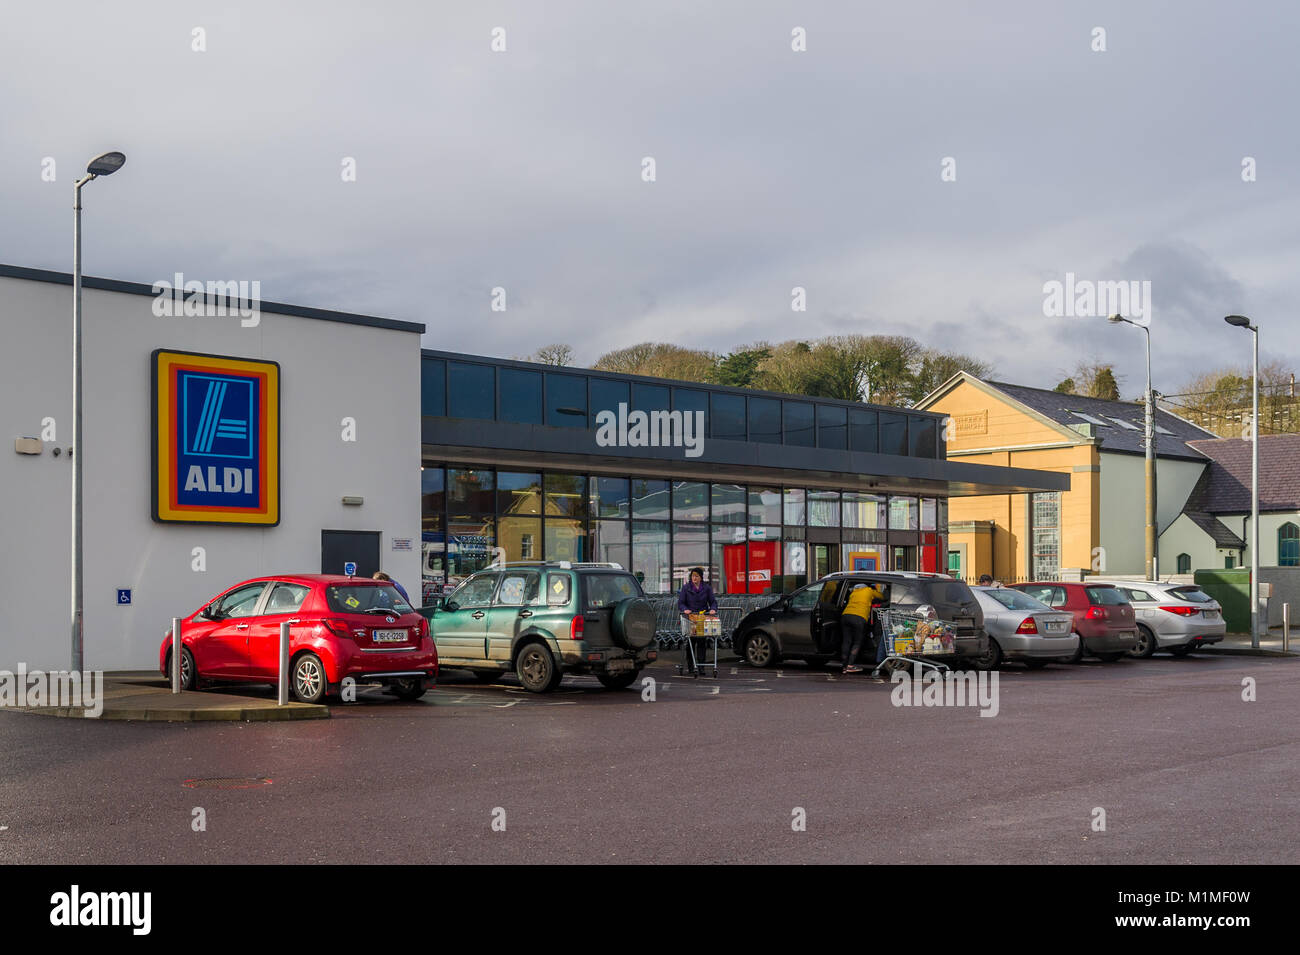 Aldi discount supermarket in Dunmanway, County Cork, Ireland with copy space. Stock Photo